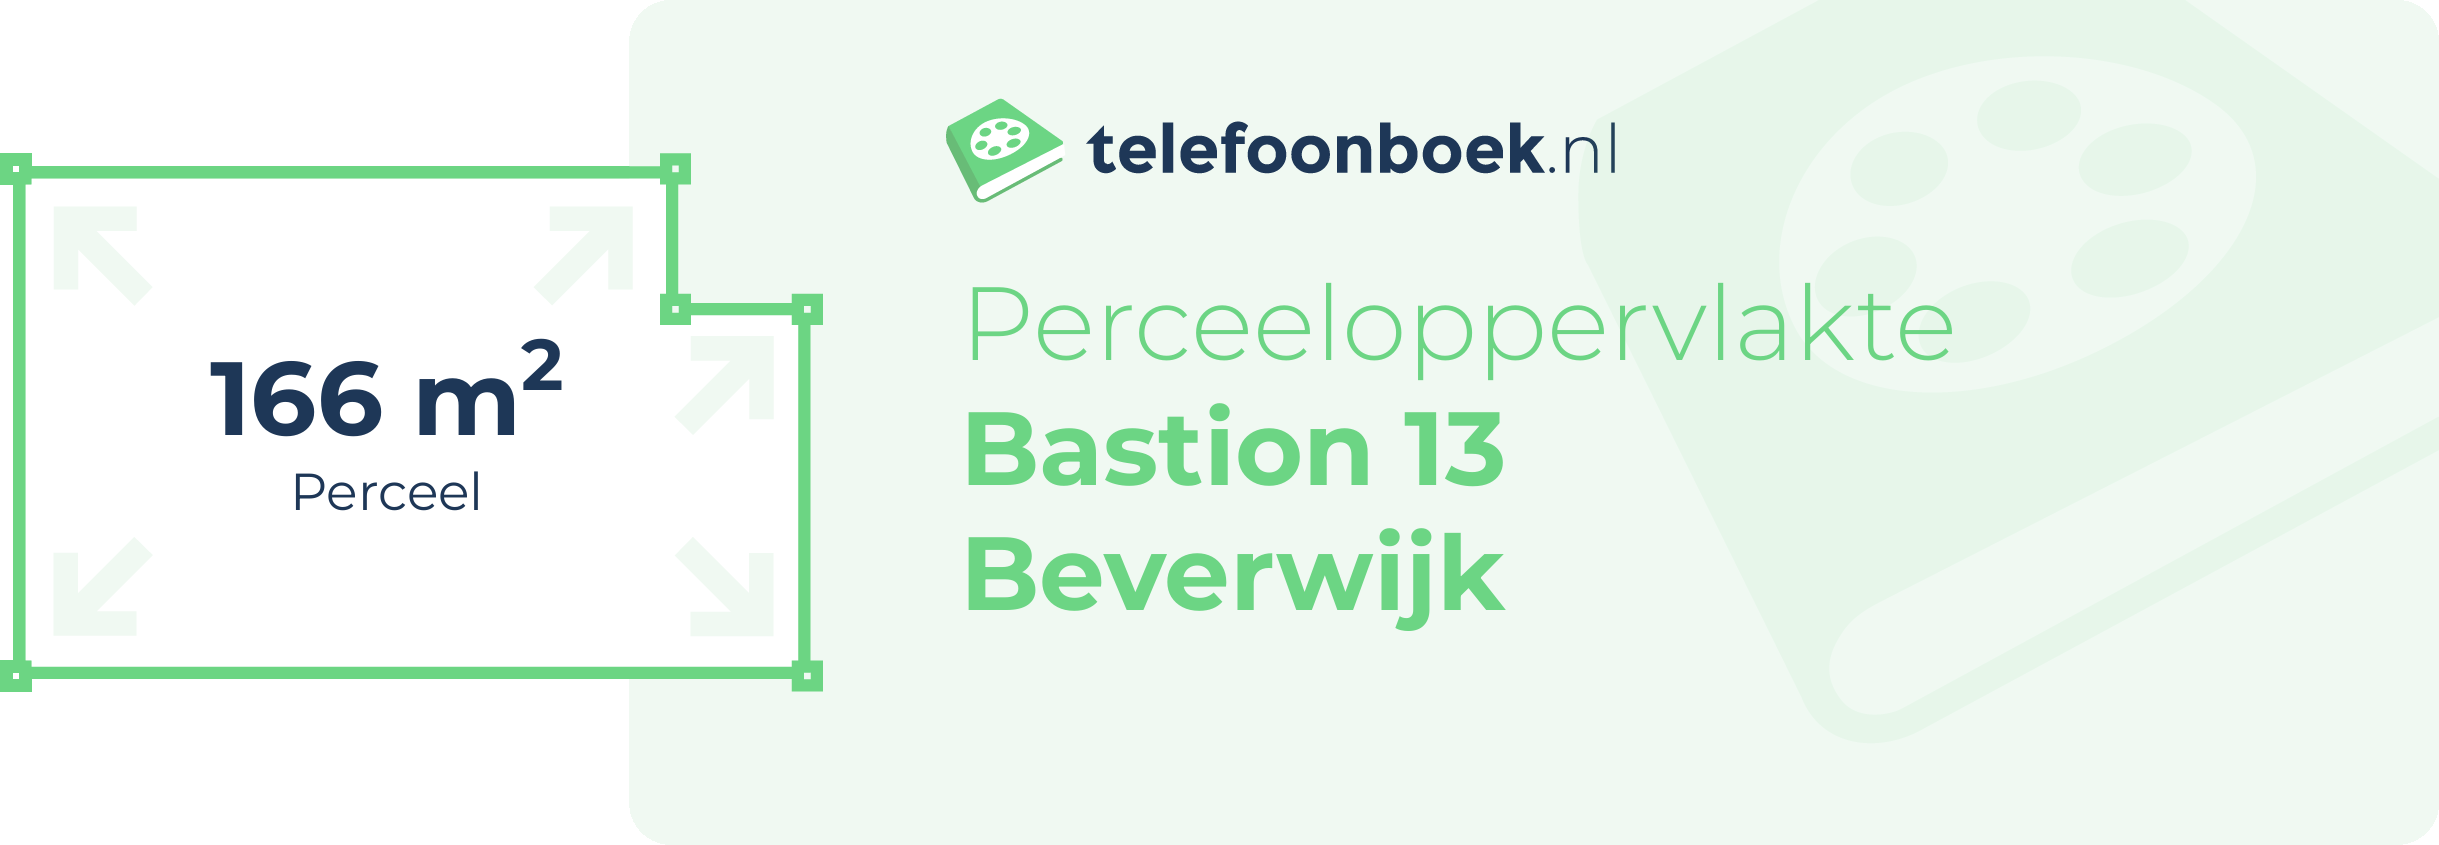 Perceeloppervlakte Bastion 13 Beverwijk